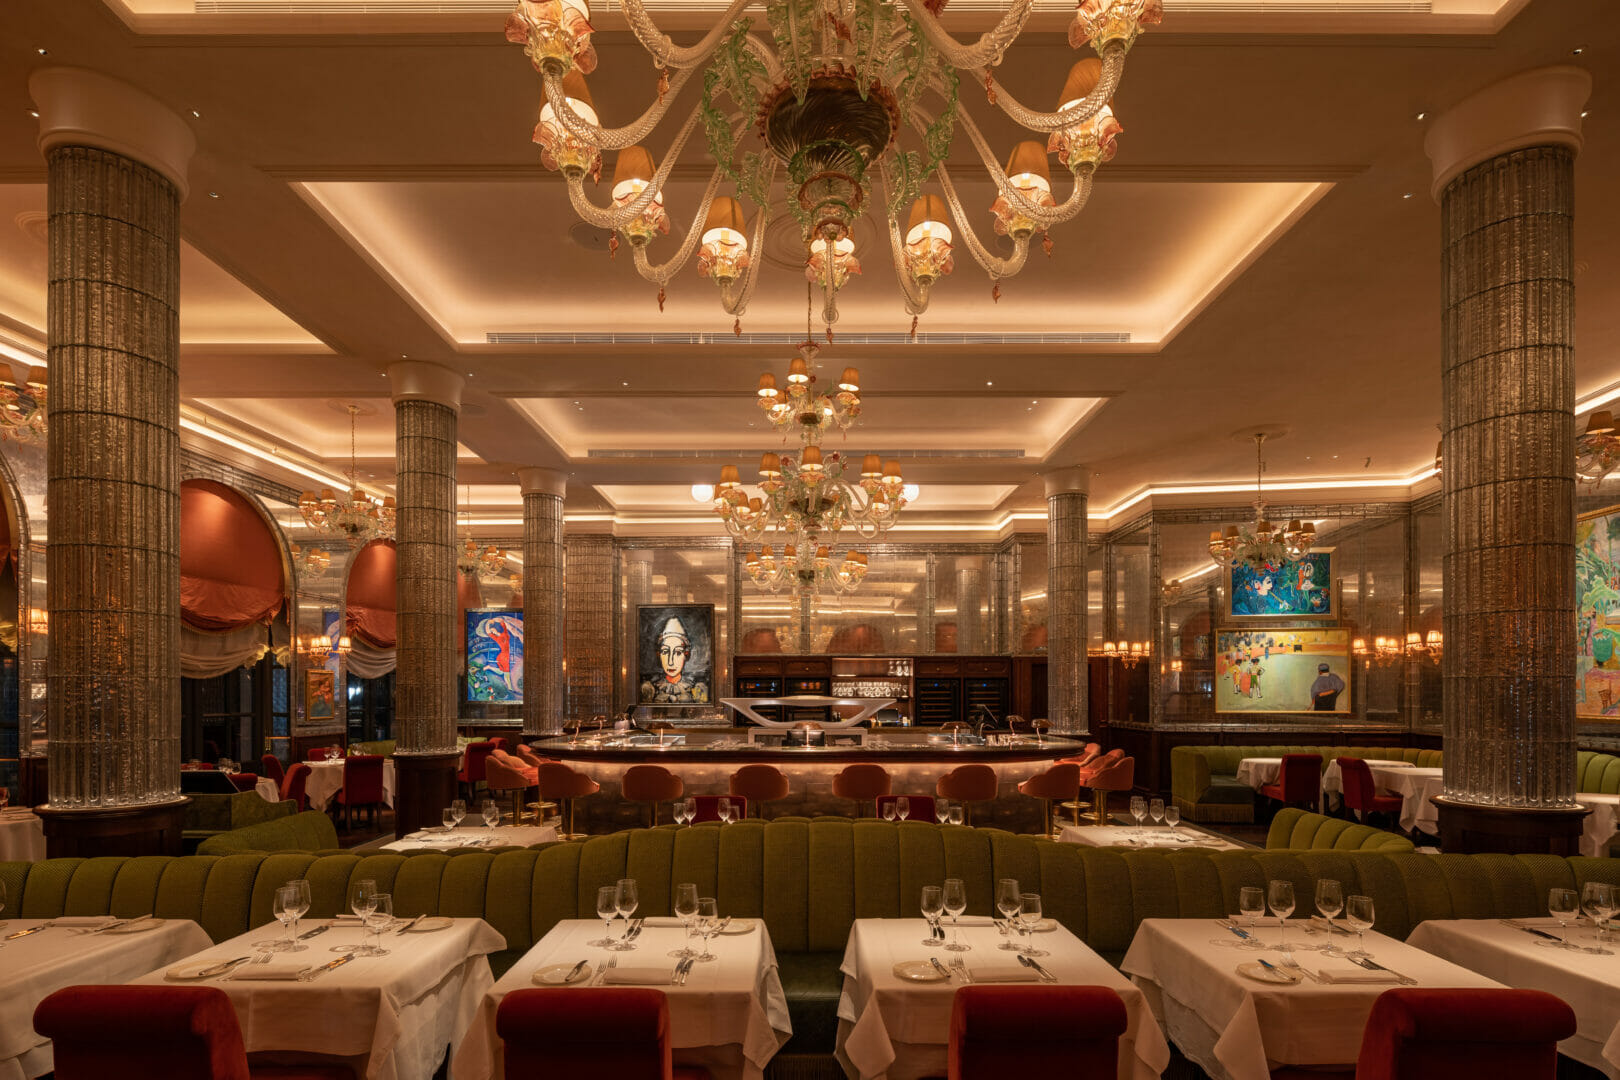 LEDFlex lighting solutions bring elegance to destination dining